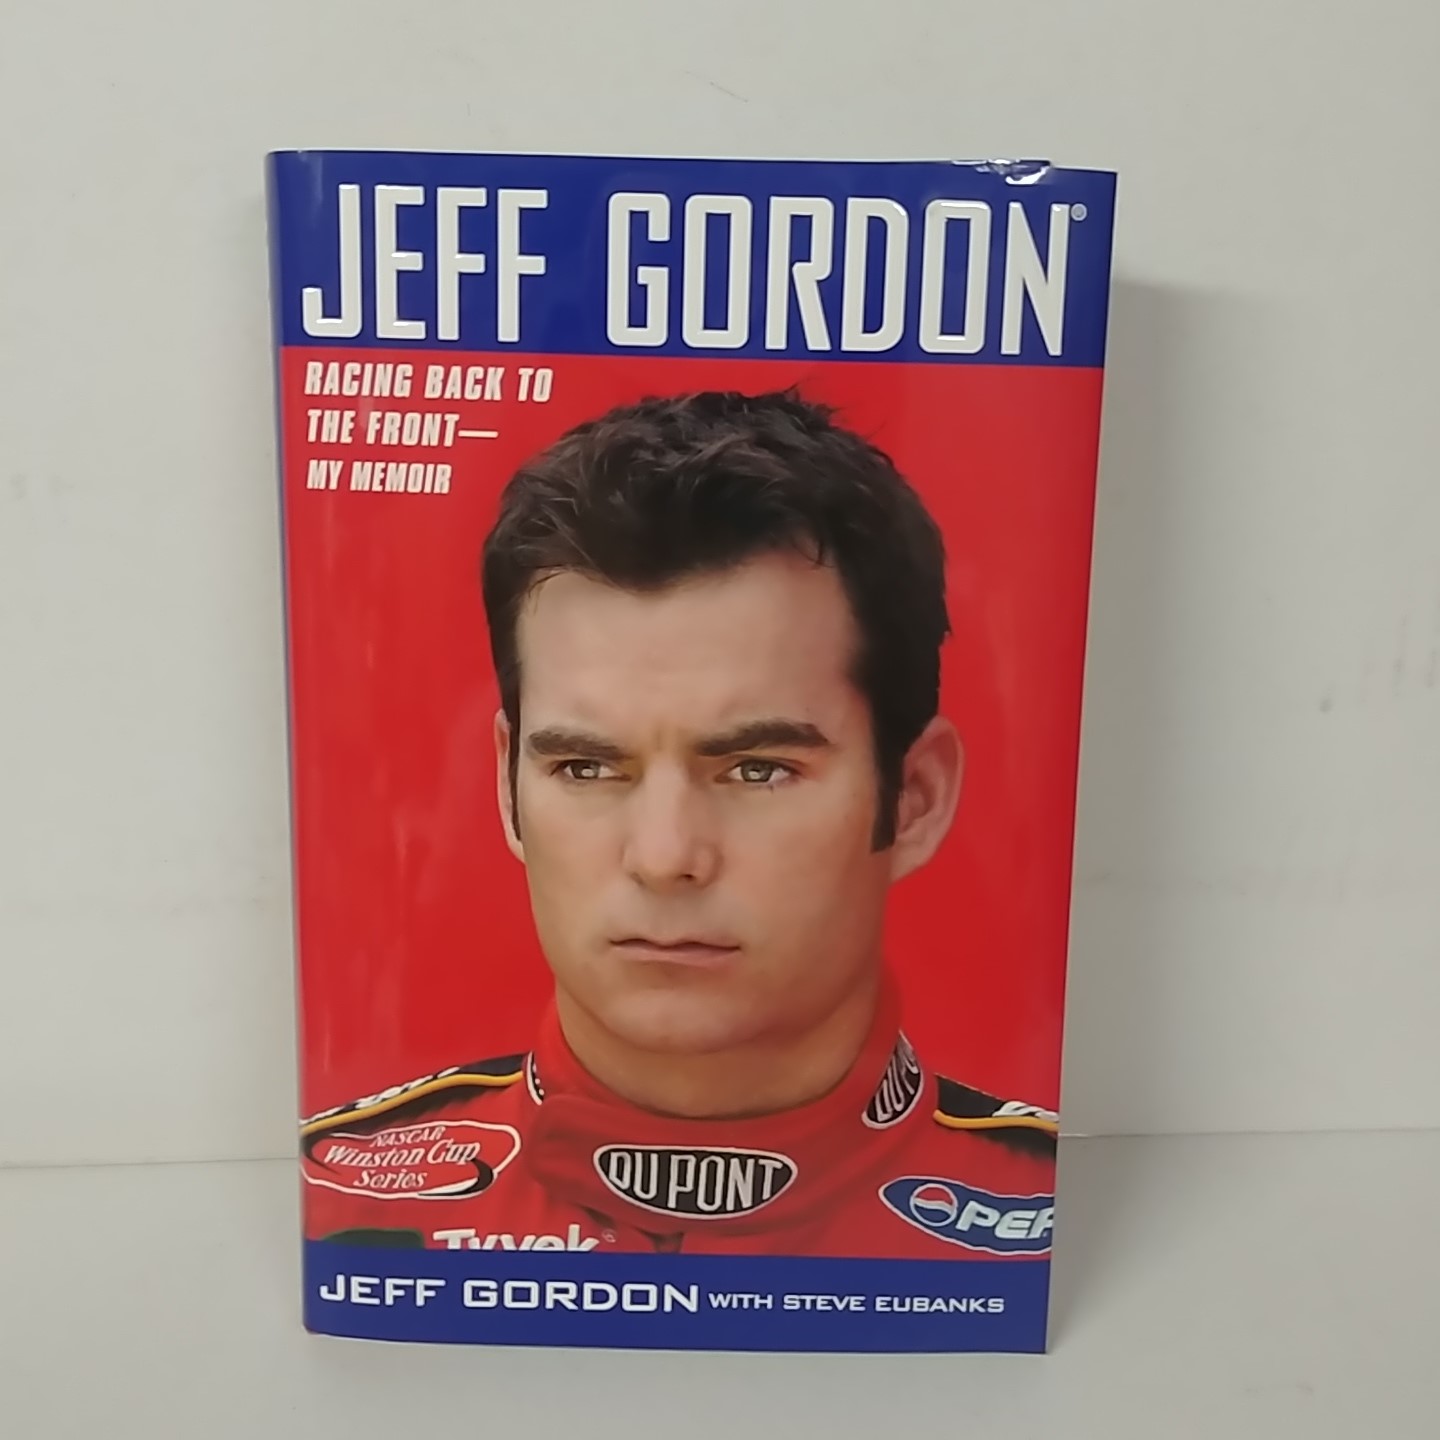 2003 Jeff Gordon "Racing Back To The Front" Memoir